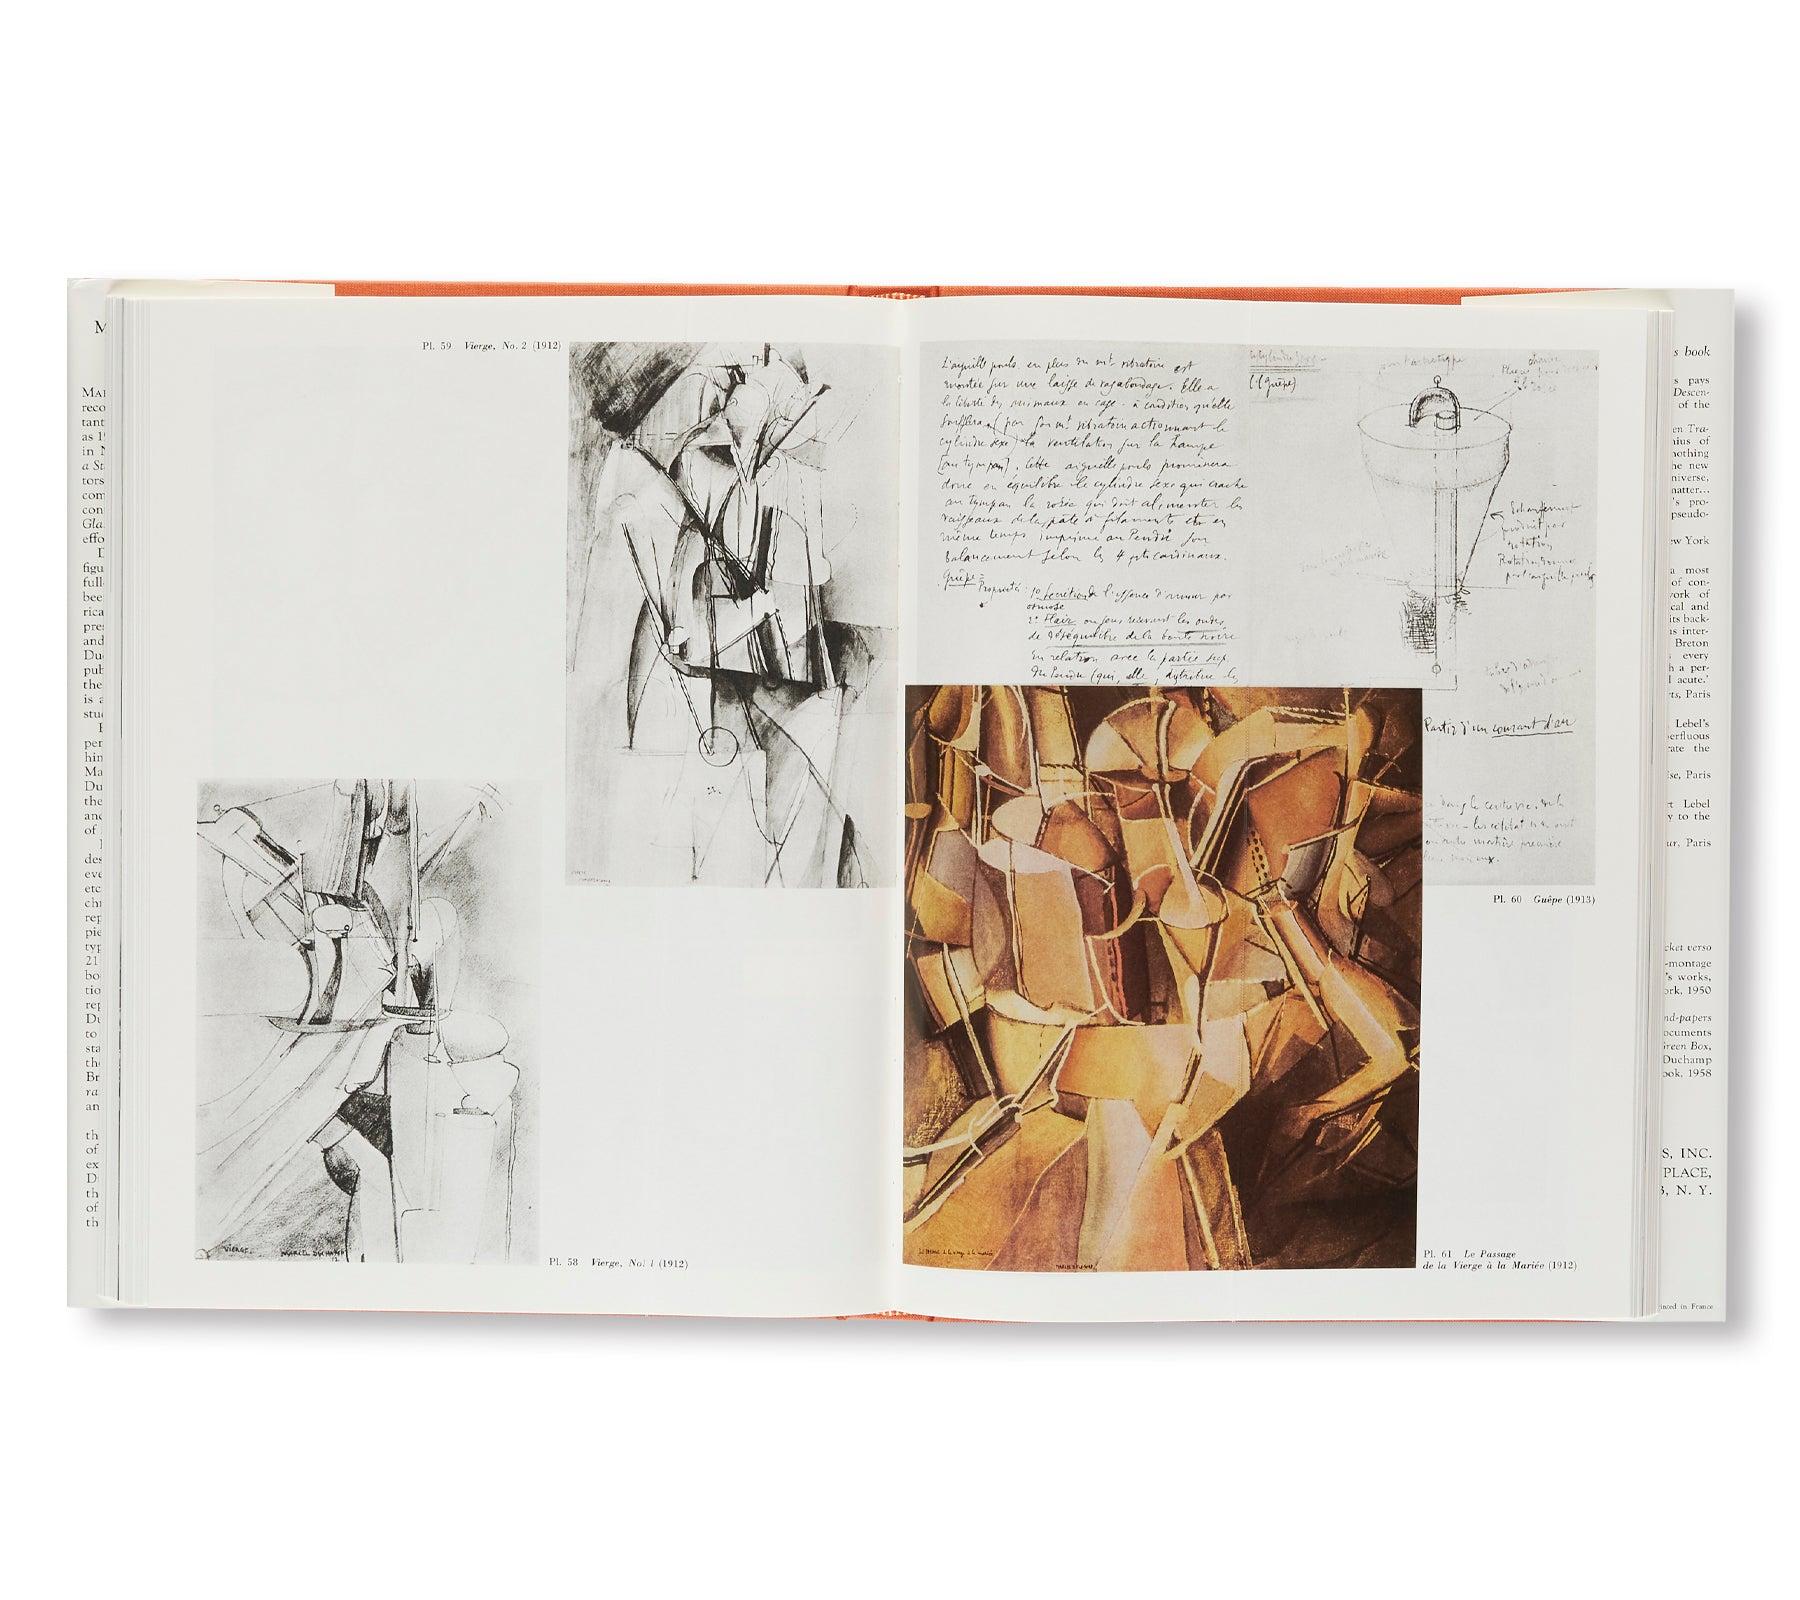 MARCEL DUCHAMP: FACSIMILE OF THE 1959 by Marcel Duchamp, Robert 